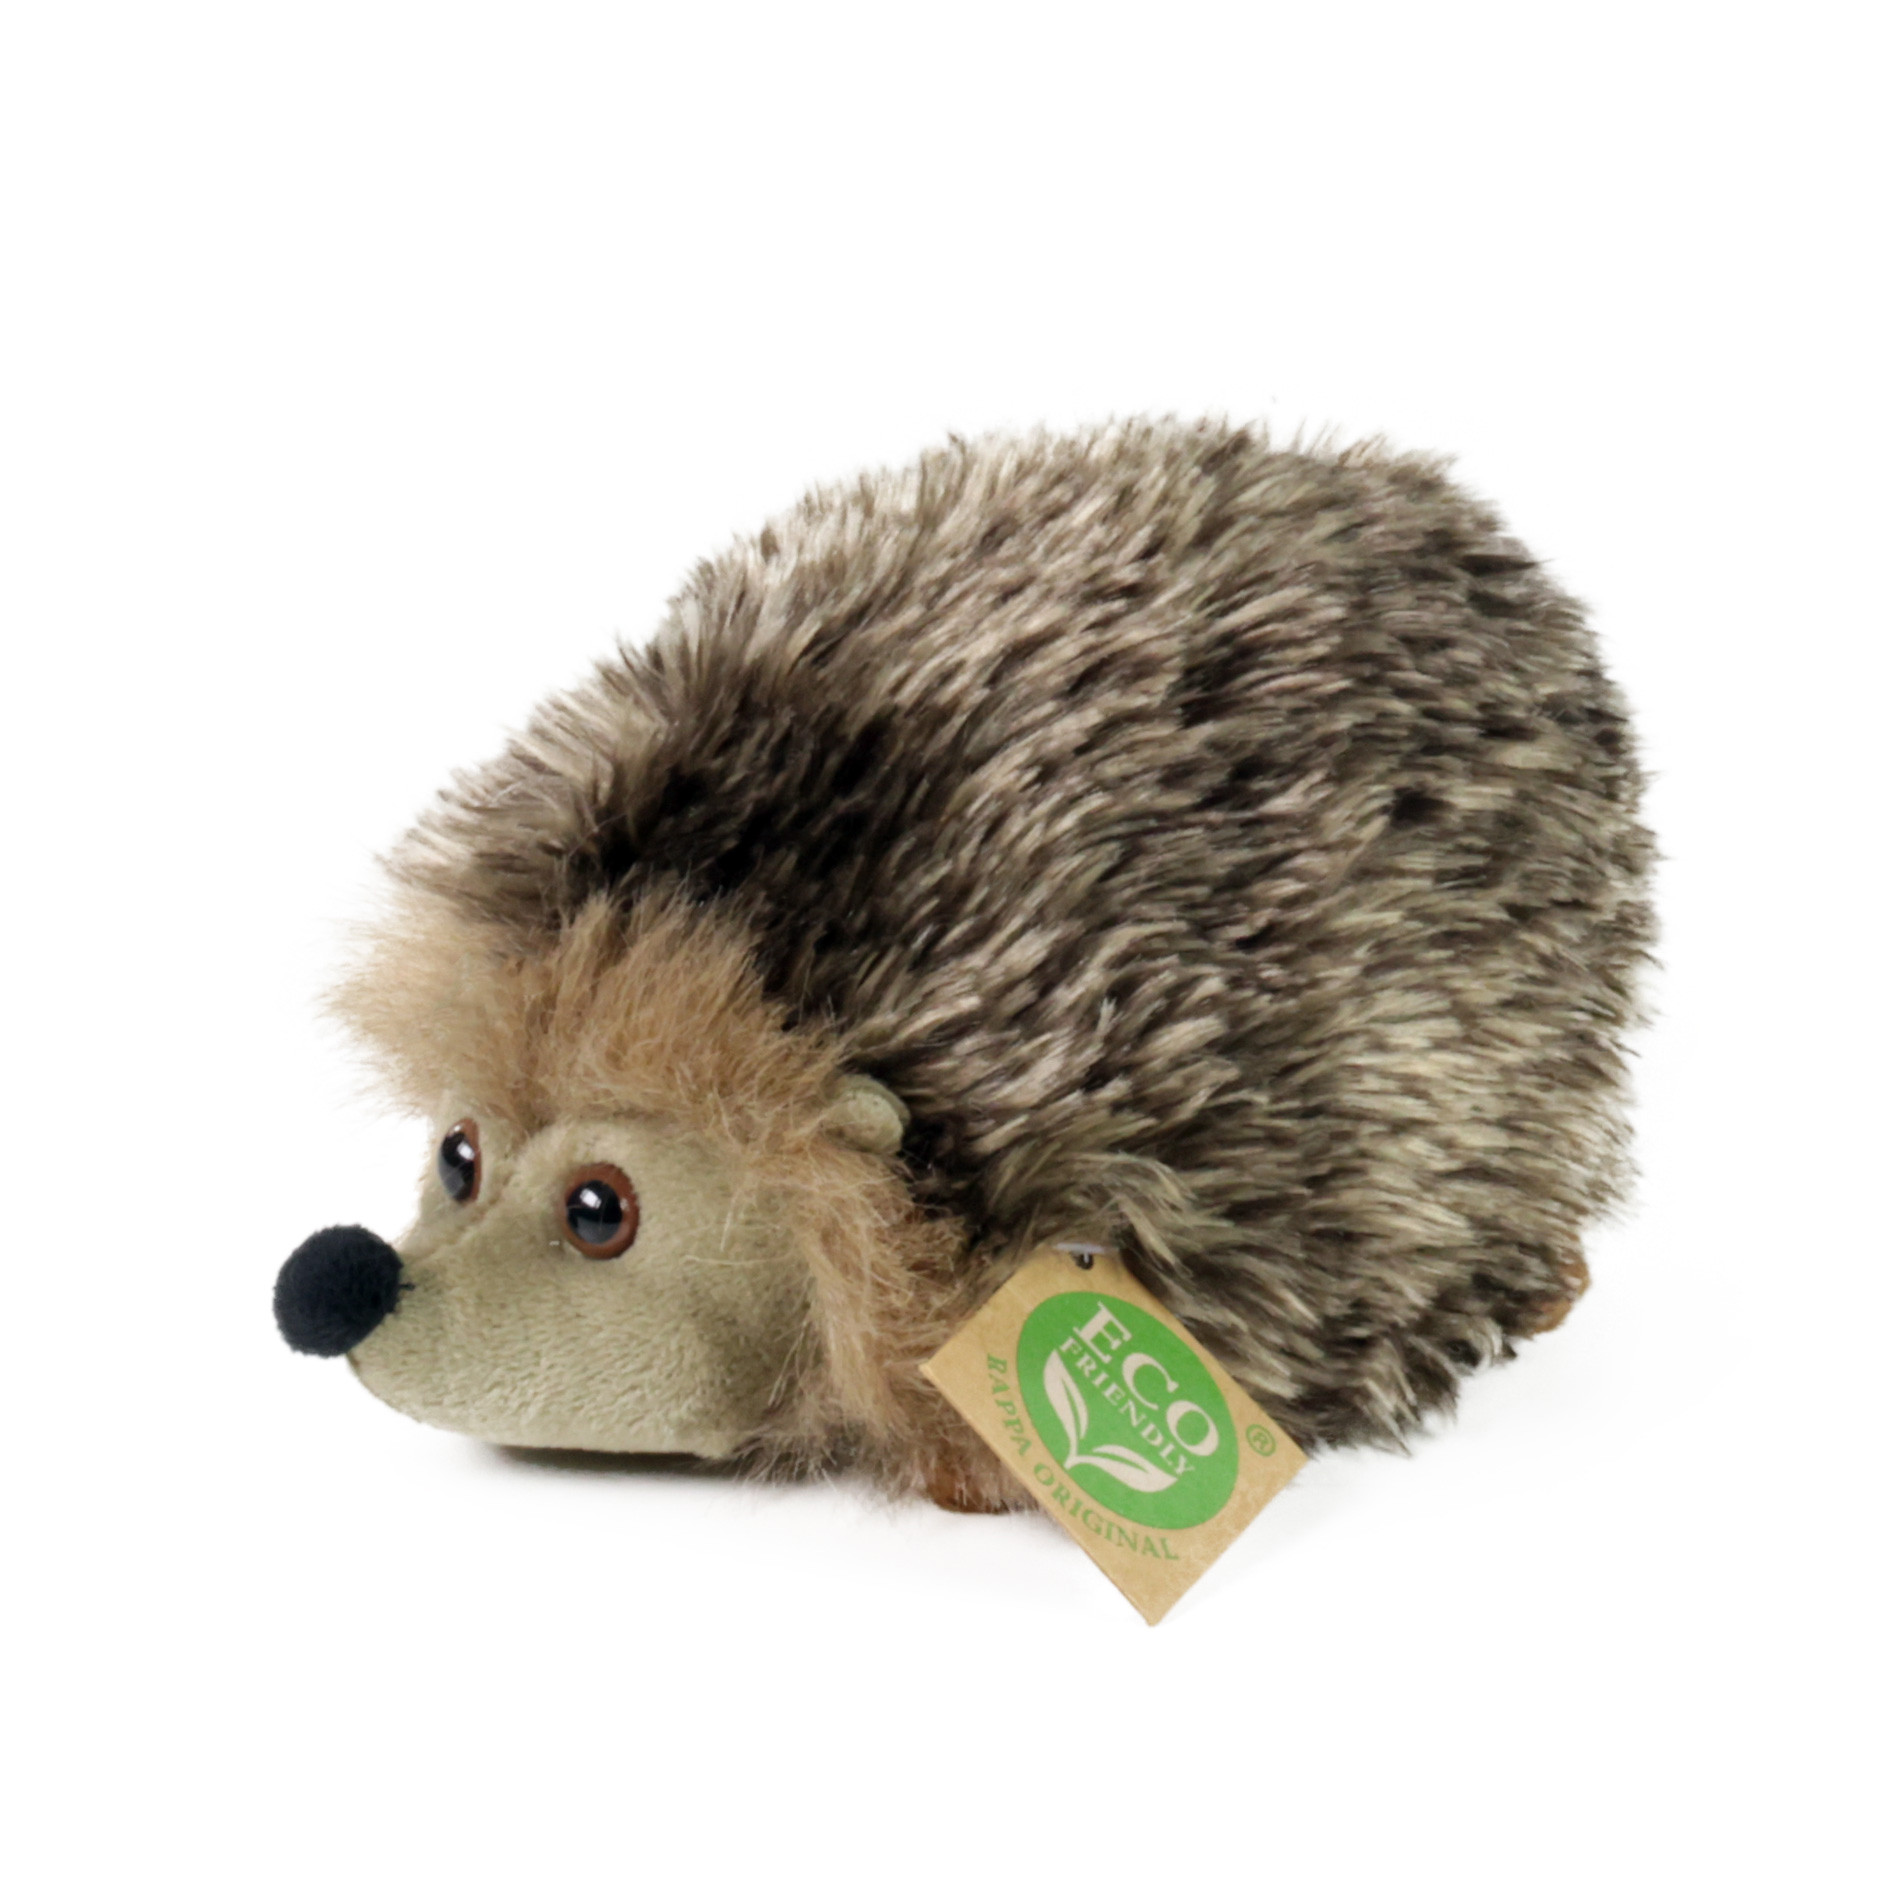 Plush hedgehog 16 cm ECO-FRIENDLY